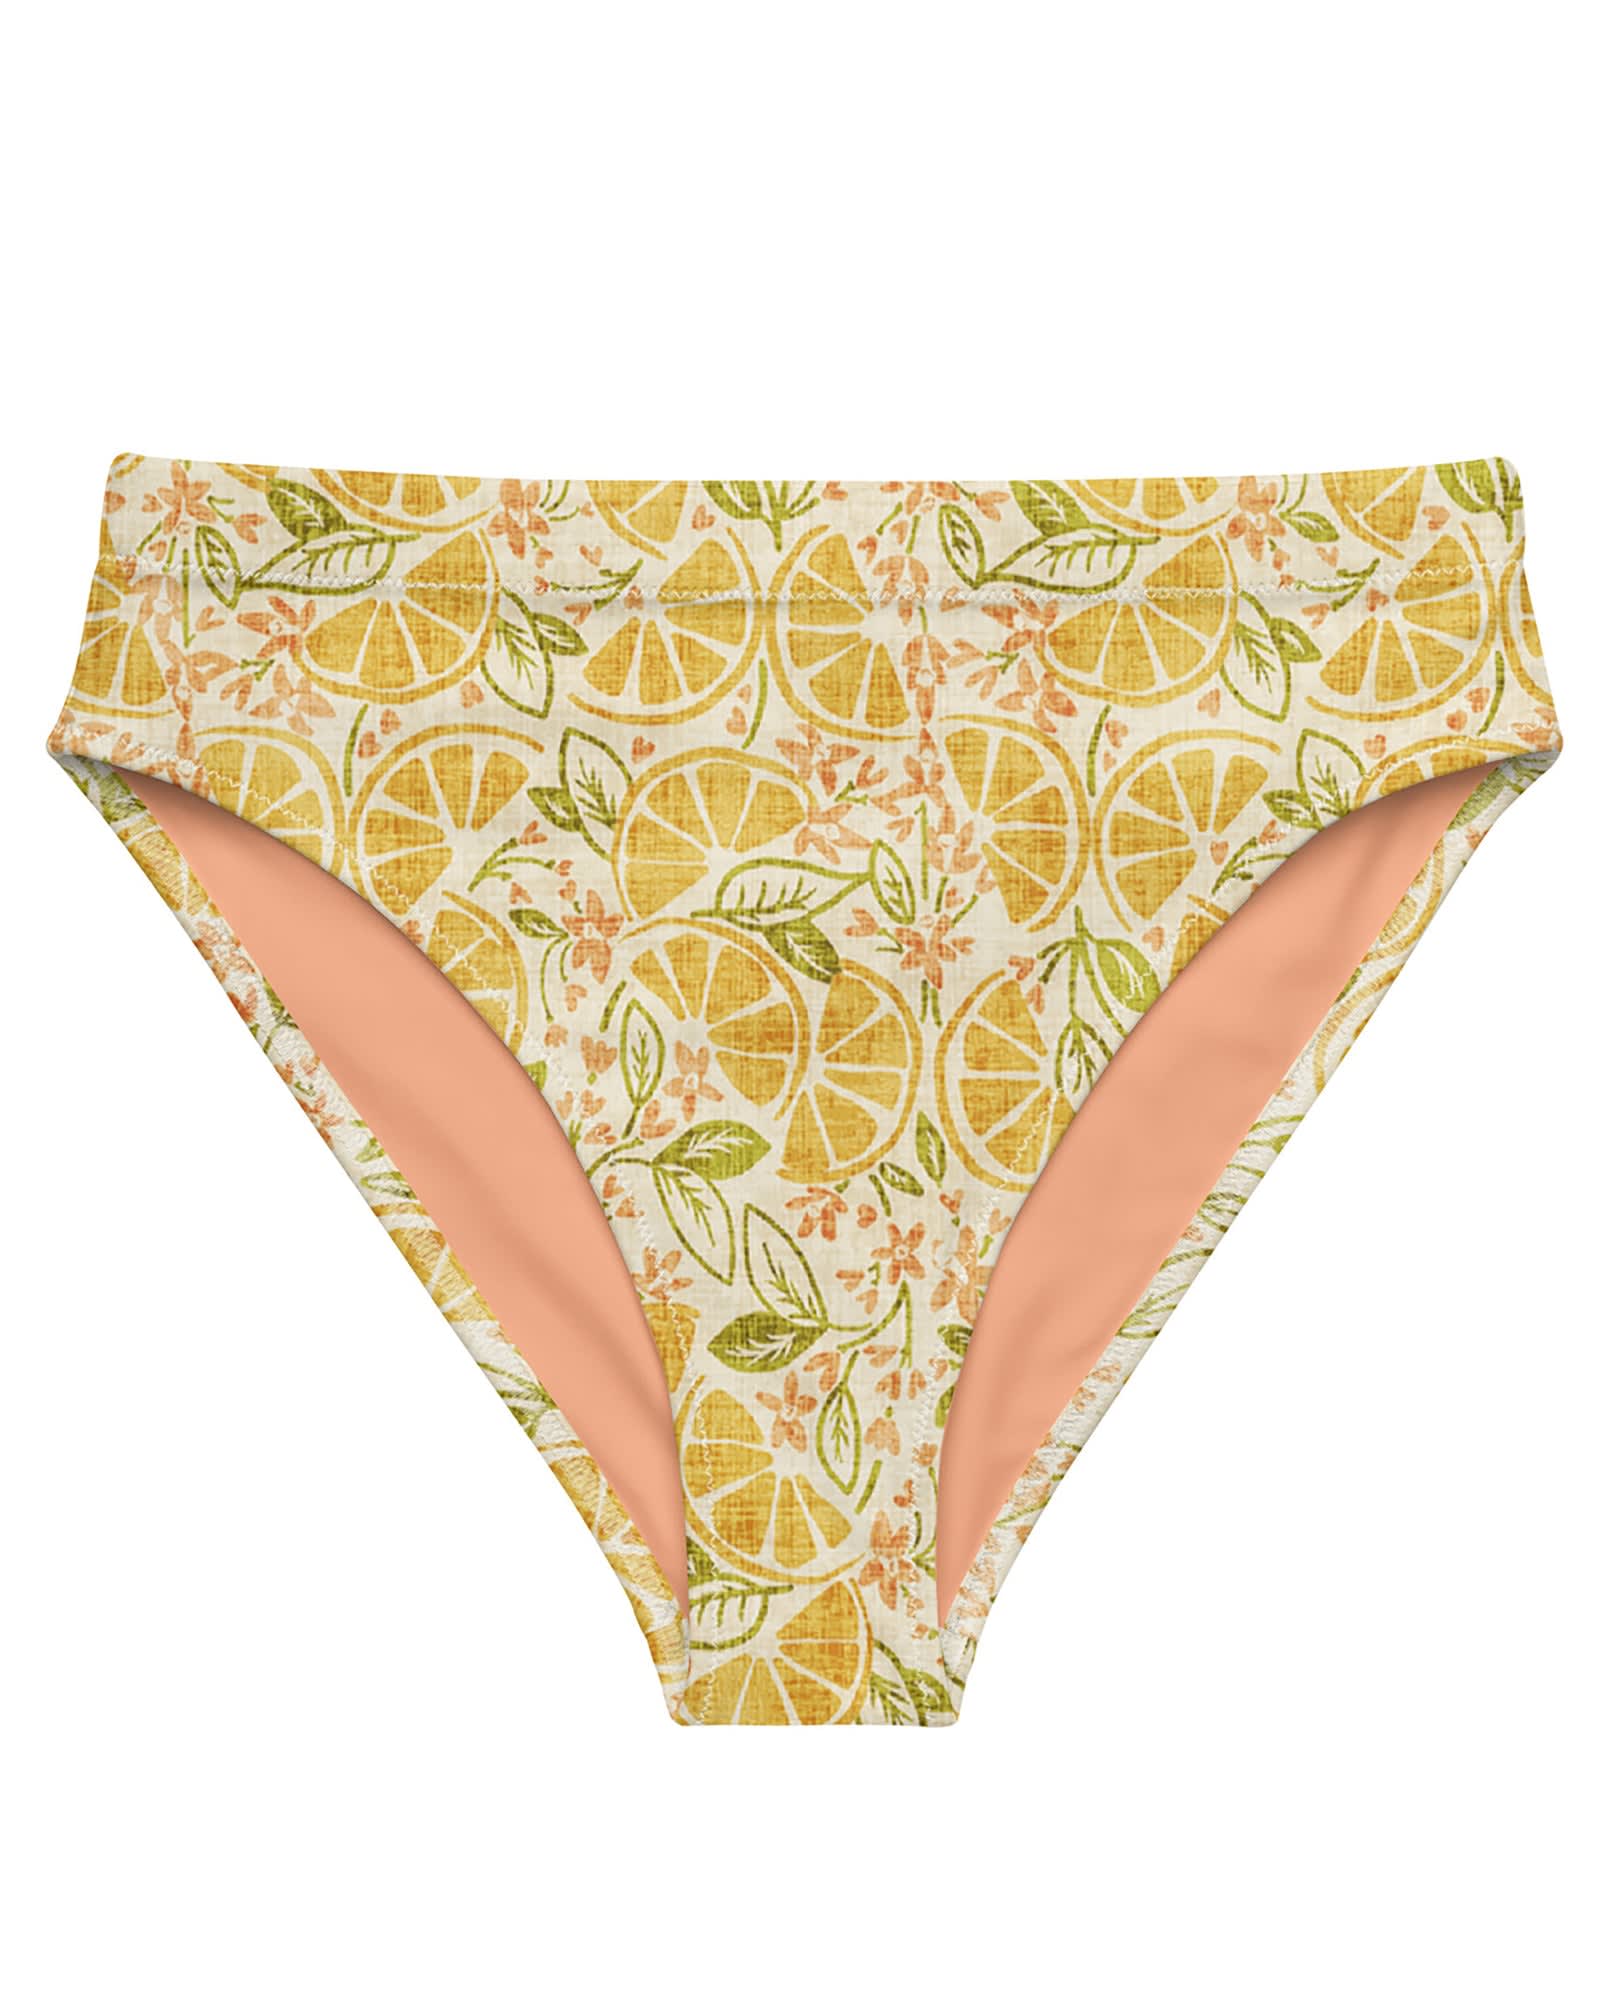 Vintage Citrus Recycled High-Waisted Bikini Bottom | Yellow/Orange Multi